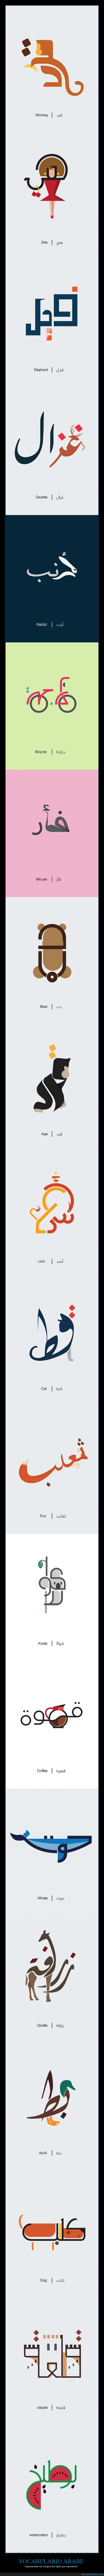 árabe,significado,figuras,objetos,animales